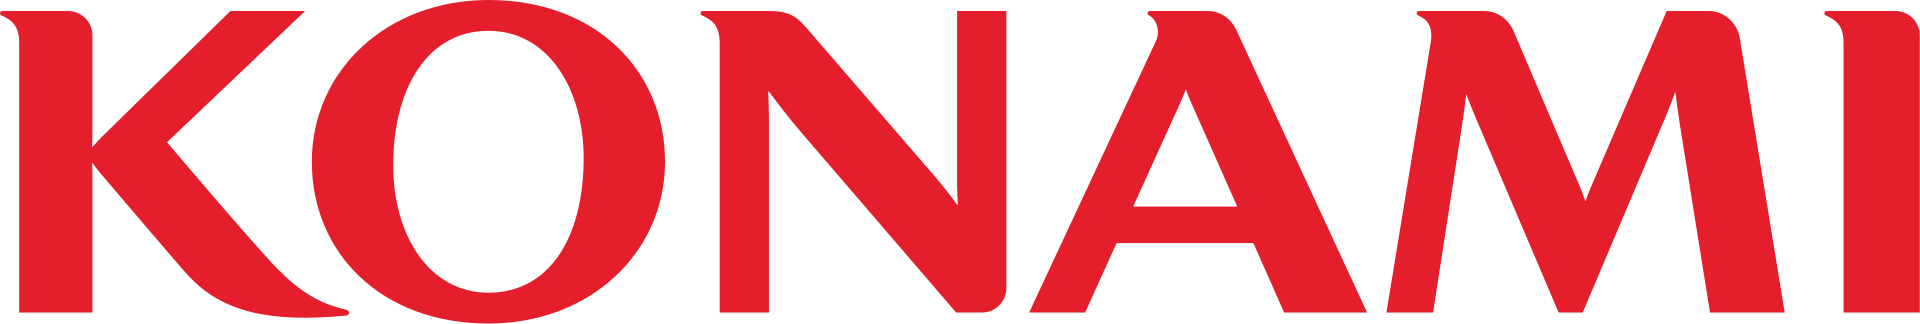 logo-konami